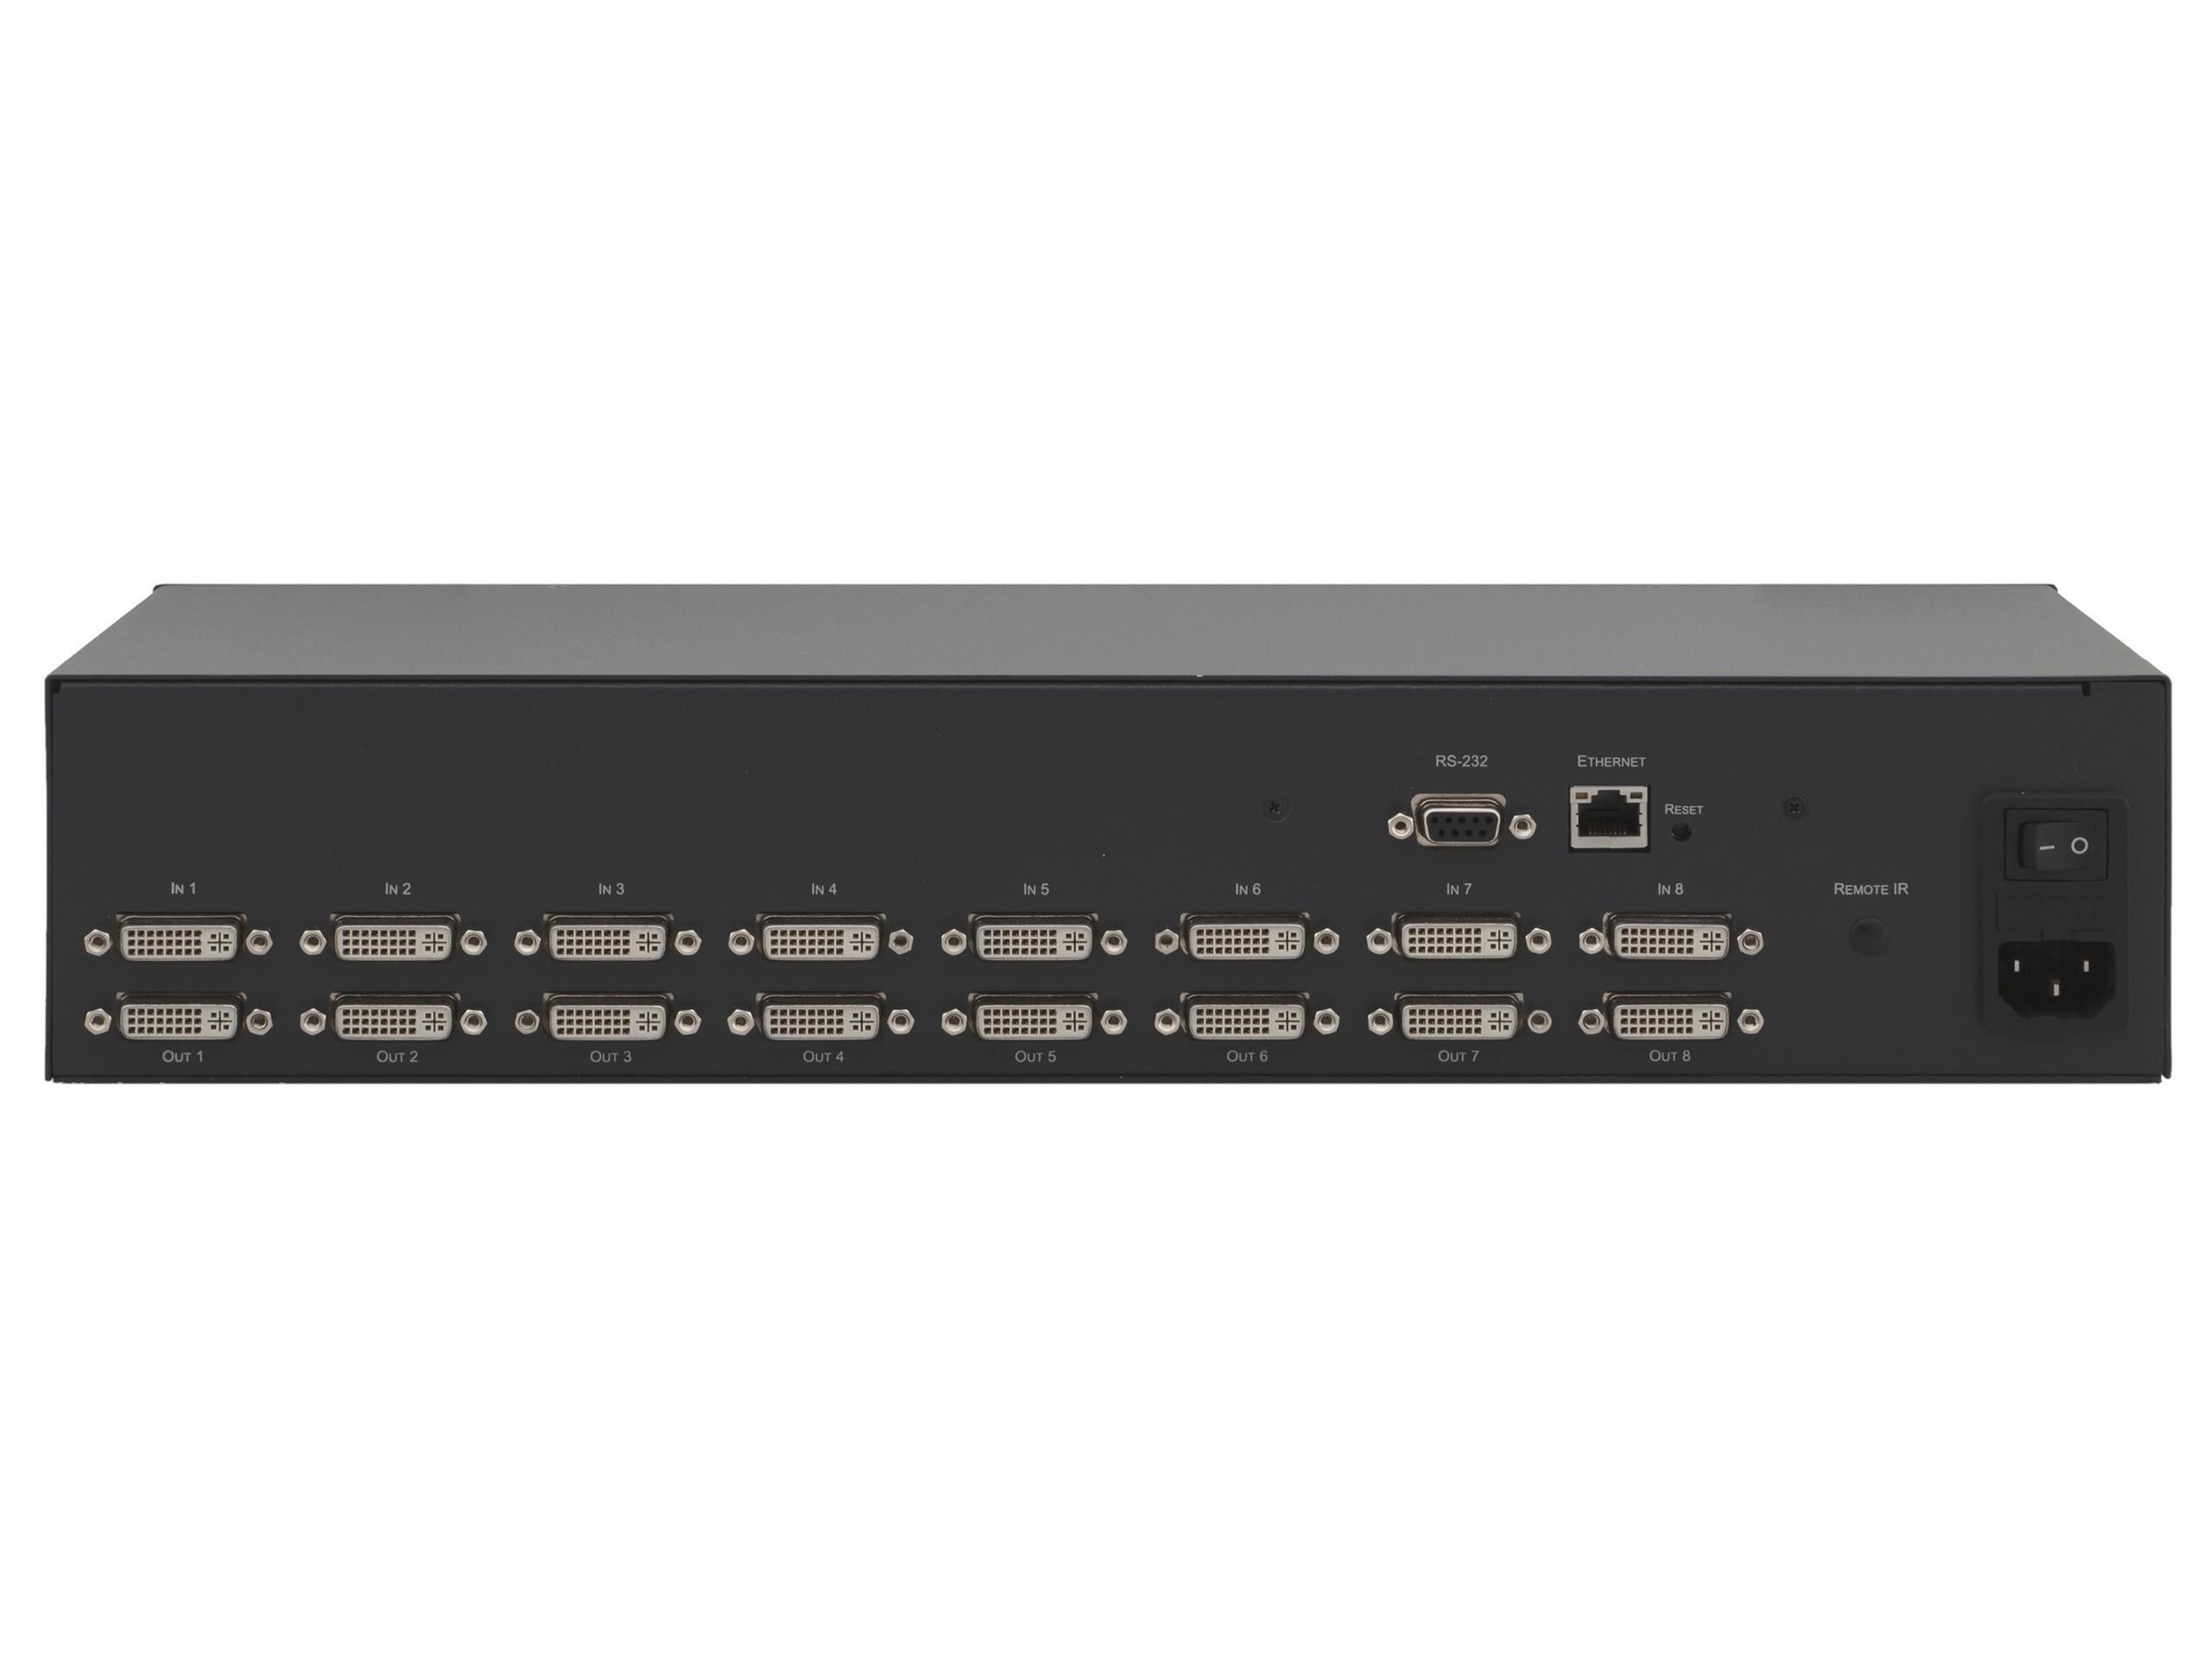 VS-88HDCPxl 8x8 DVI (HDCP) Matrix Switcher by Kramer